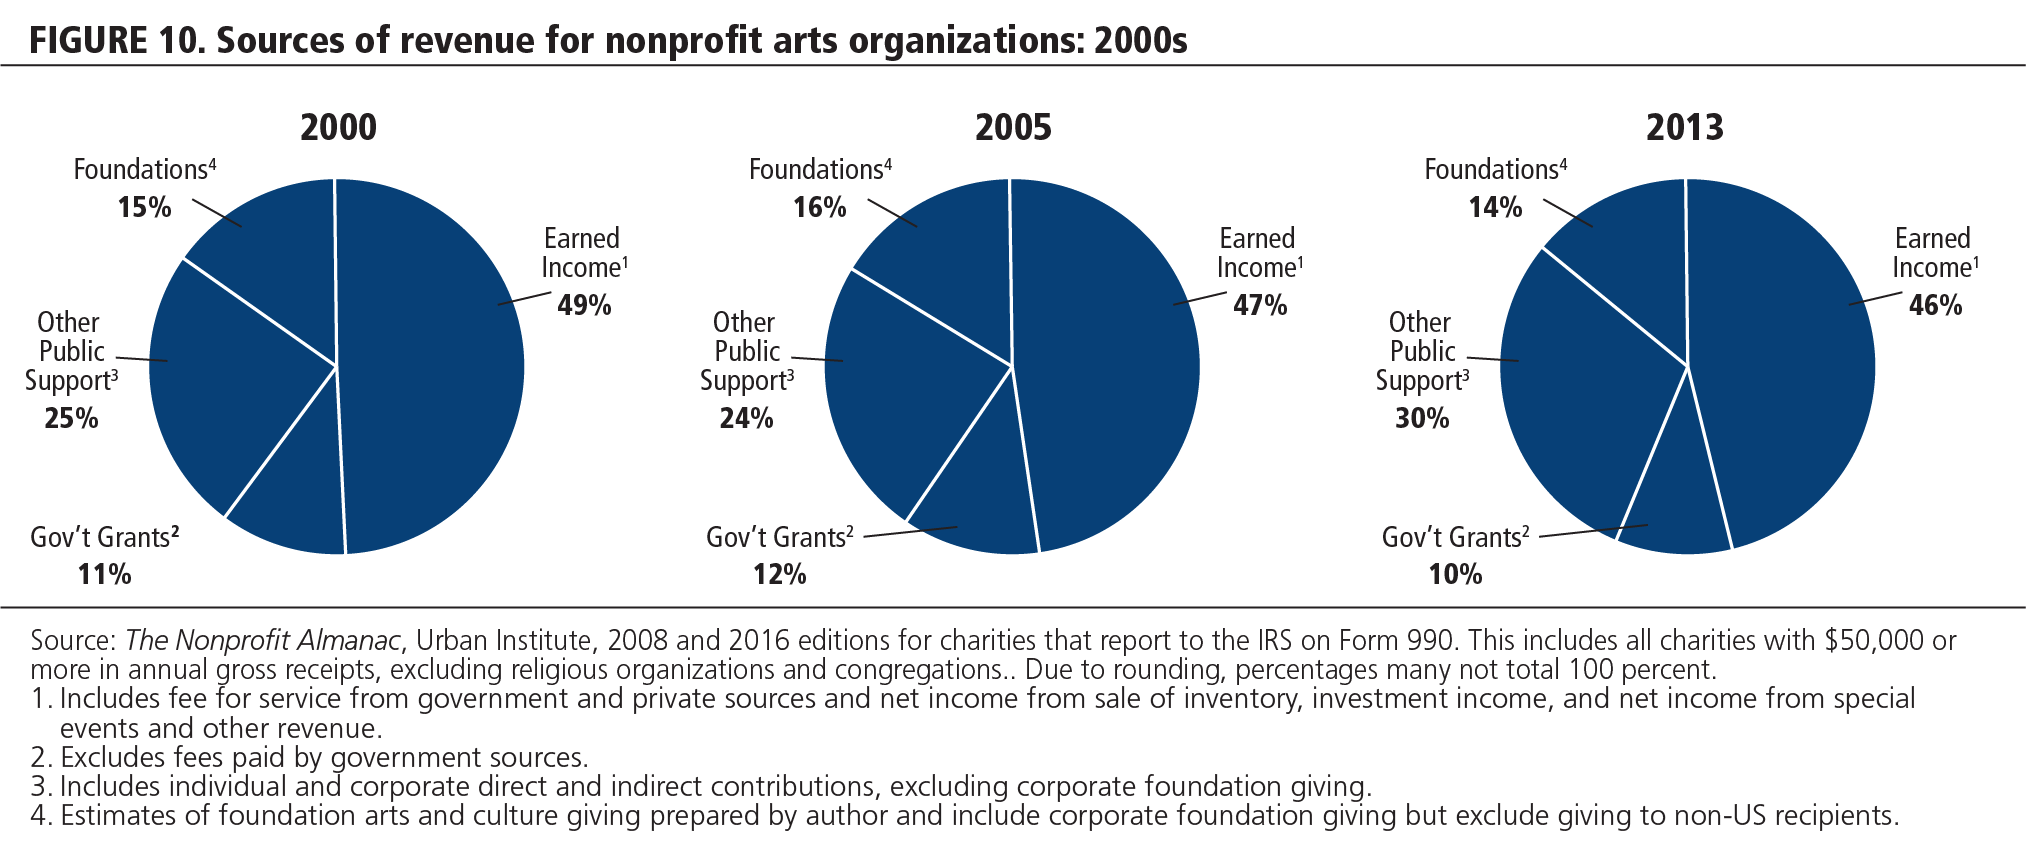 FIGURE 10 Sources of revenue for nonprofit arts organizations: 2000s